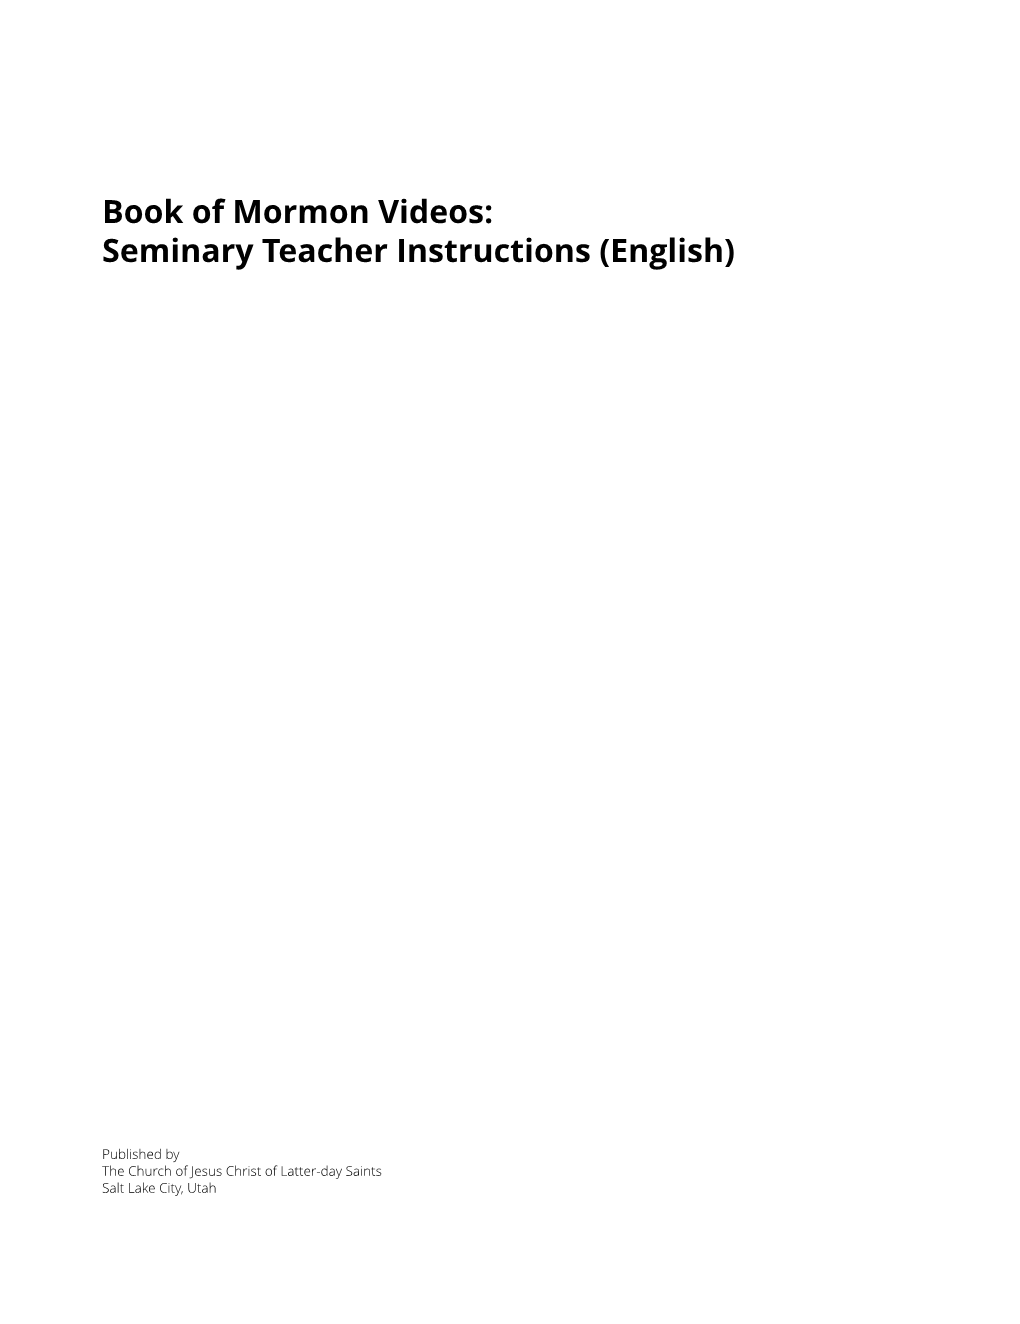 Book of Mormon Videos: Seminary Teacher Instructions (English)